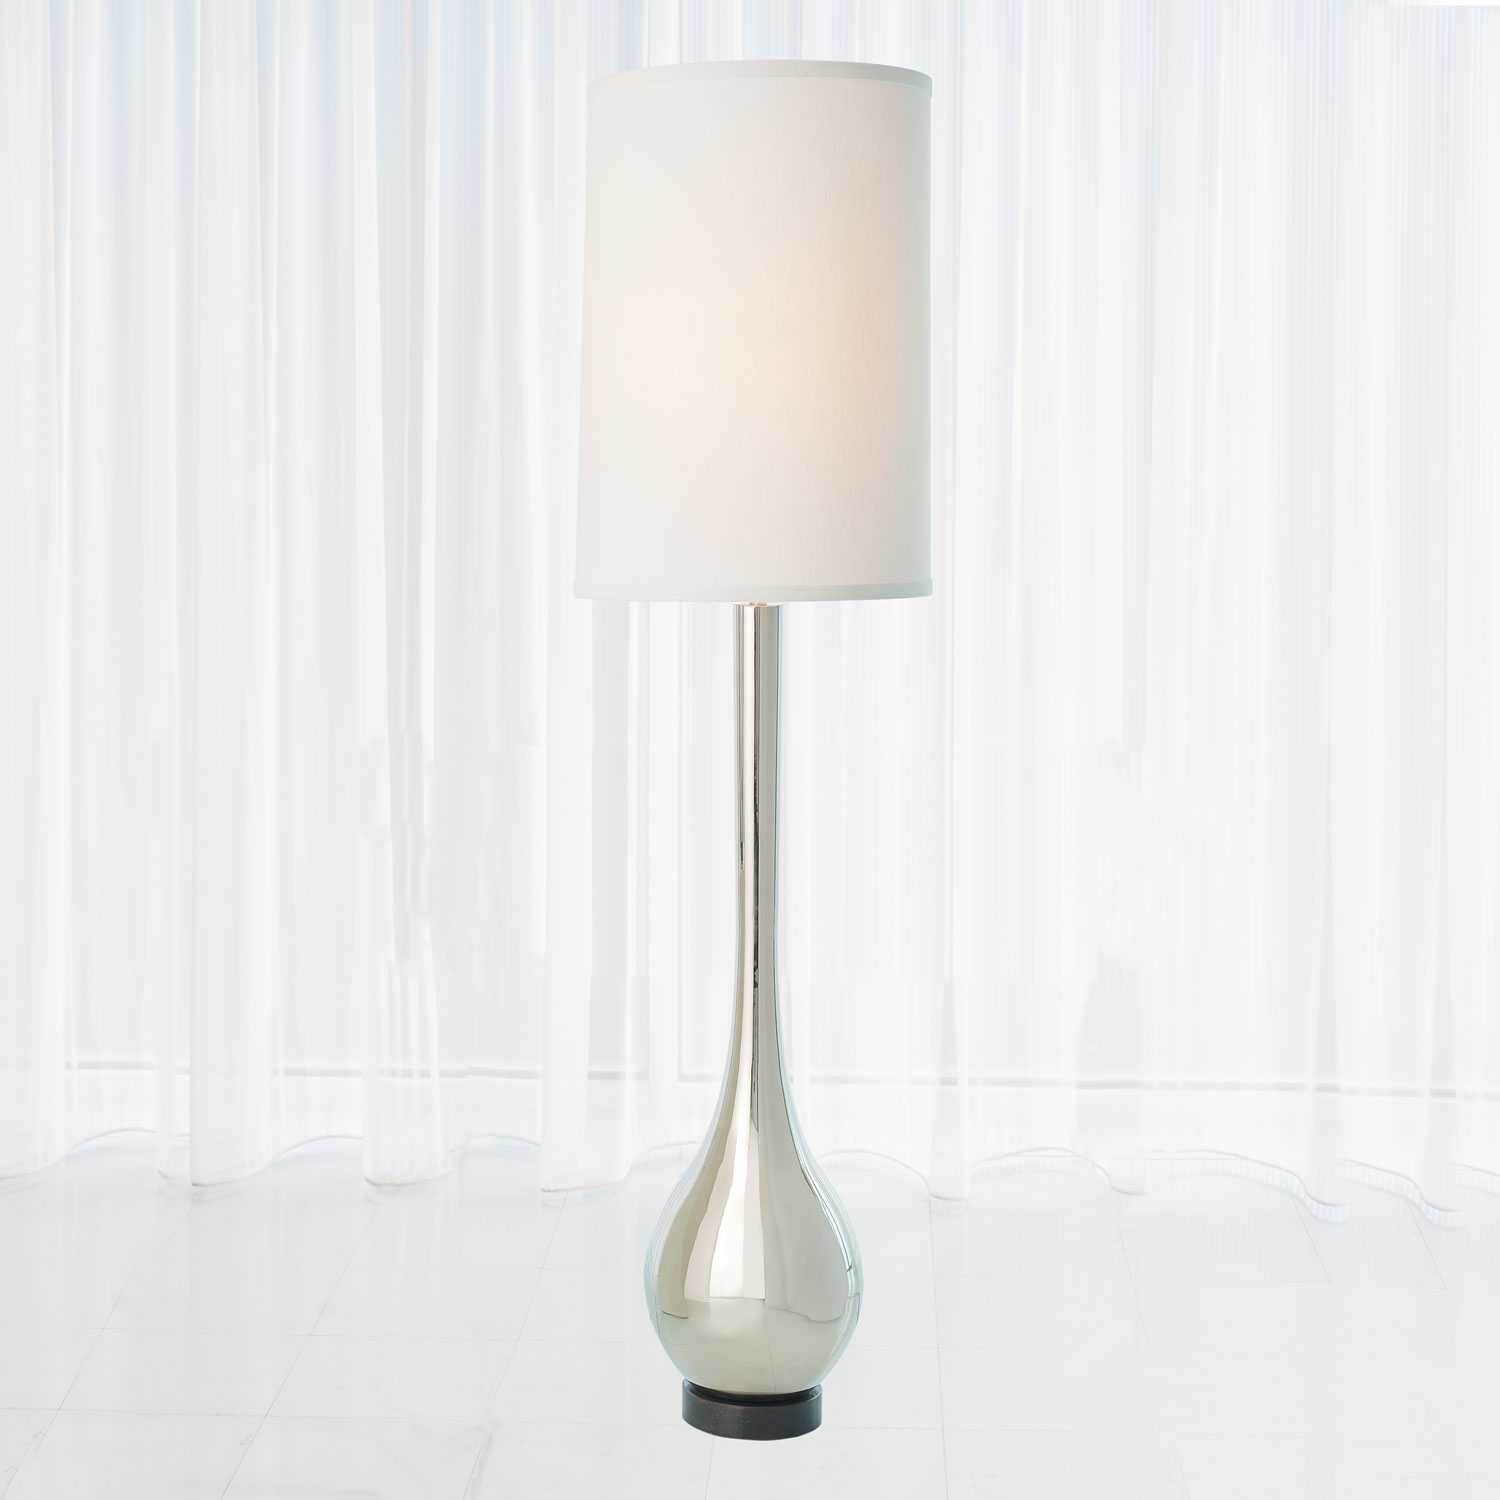 Bulb Floor Lamp Global Views 993168 inside sizing 1500 X 1500